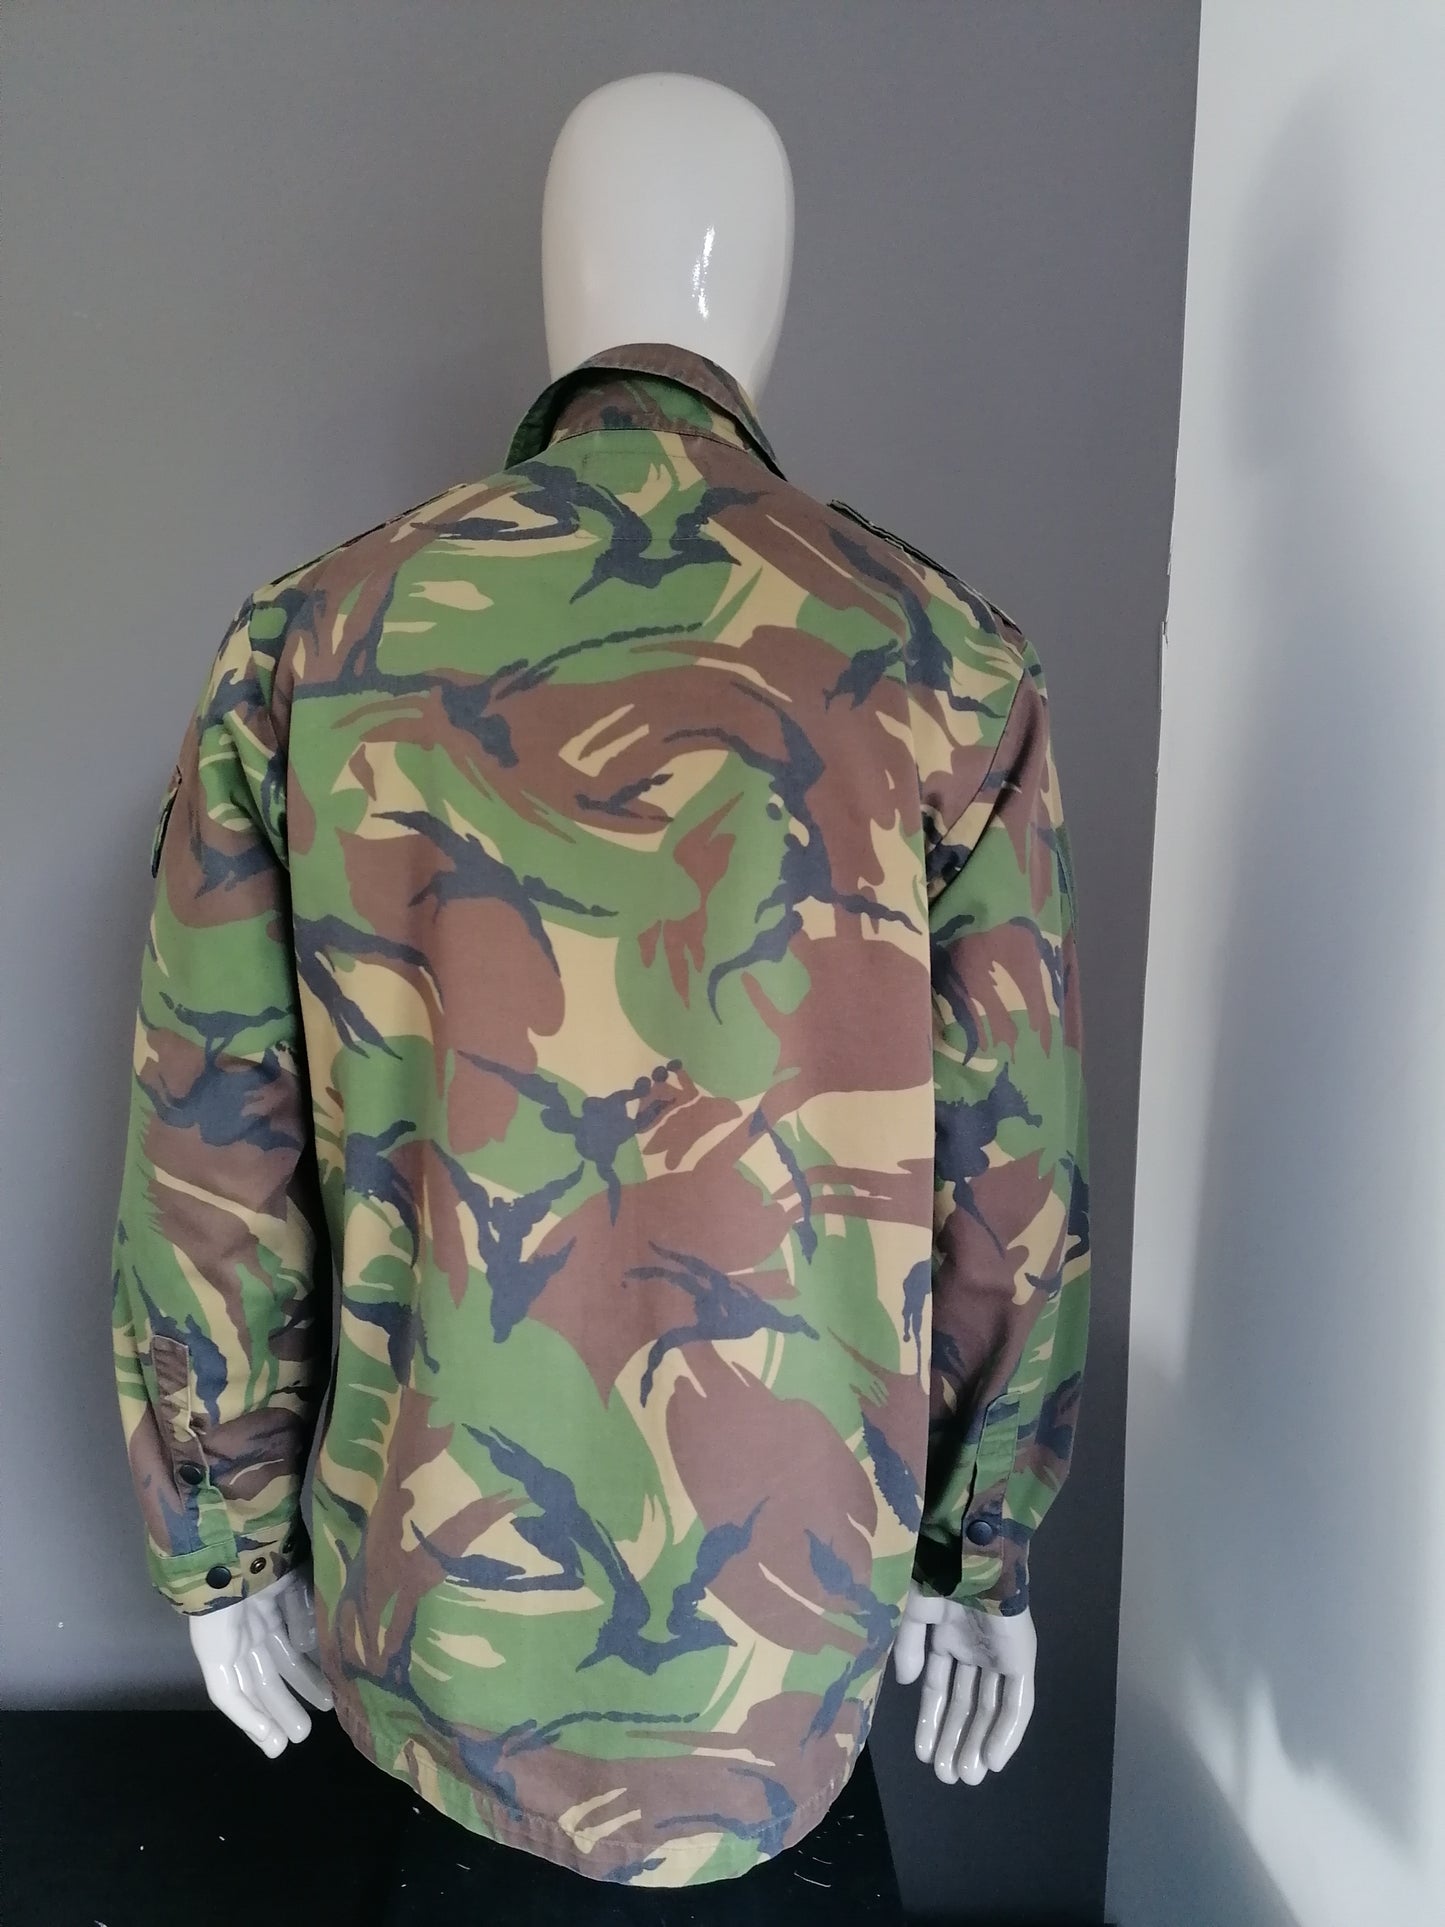 Vintage Army / Army shirt. Camouflage print with press studs. Size XL. Original.